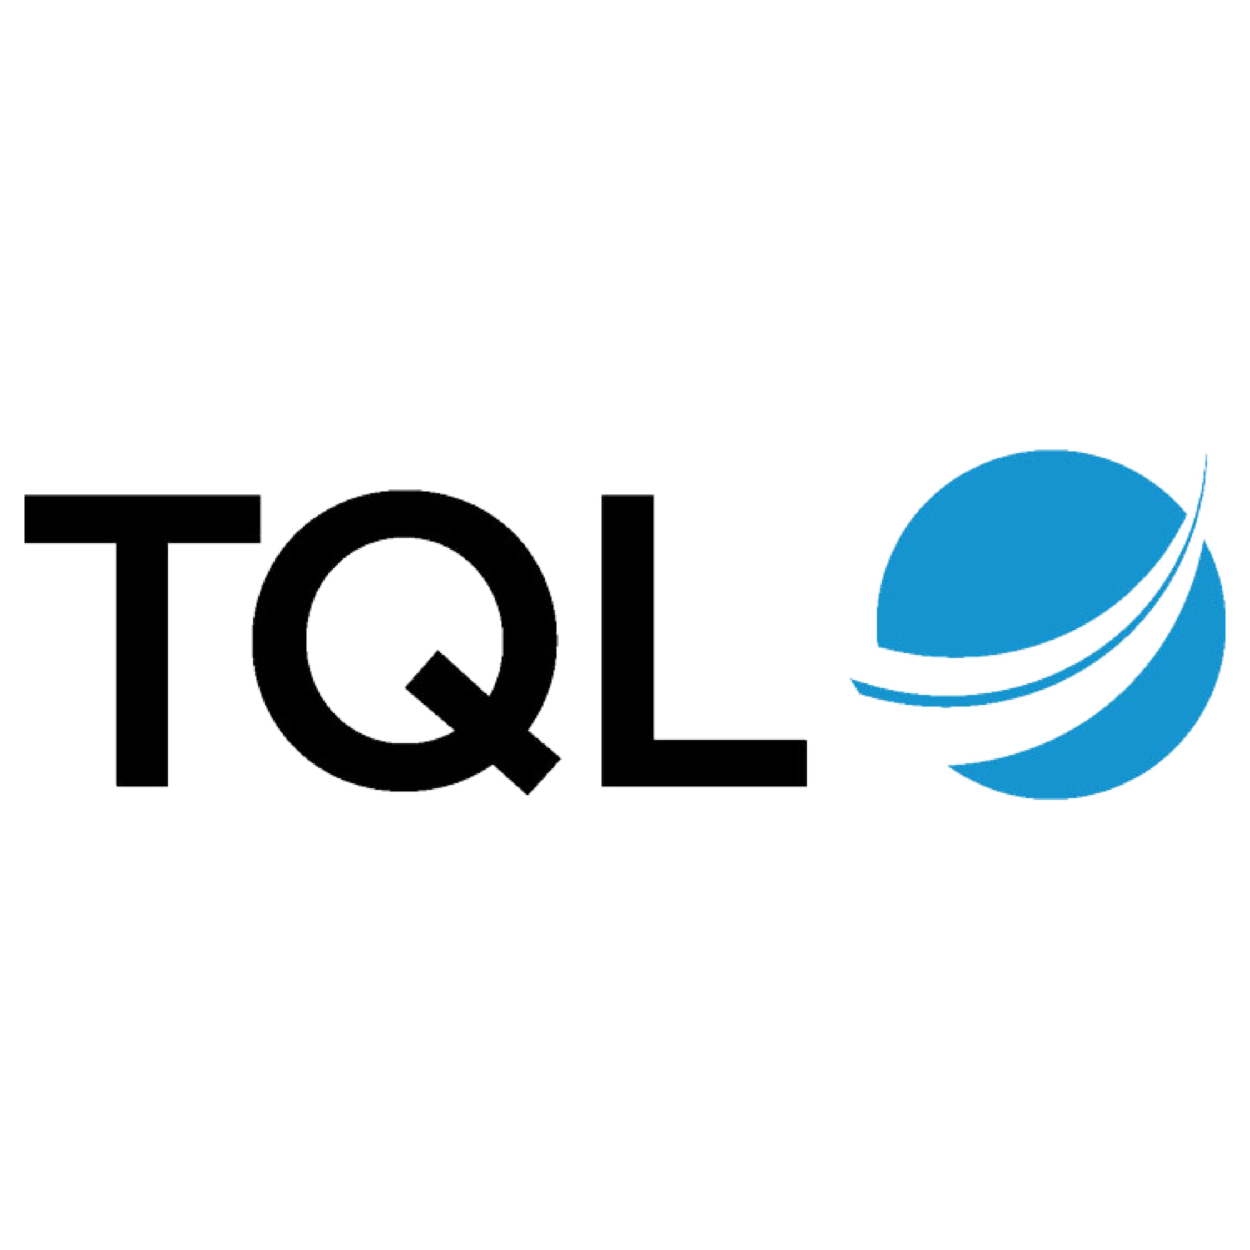 TQL Logo